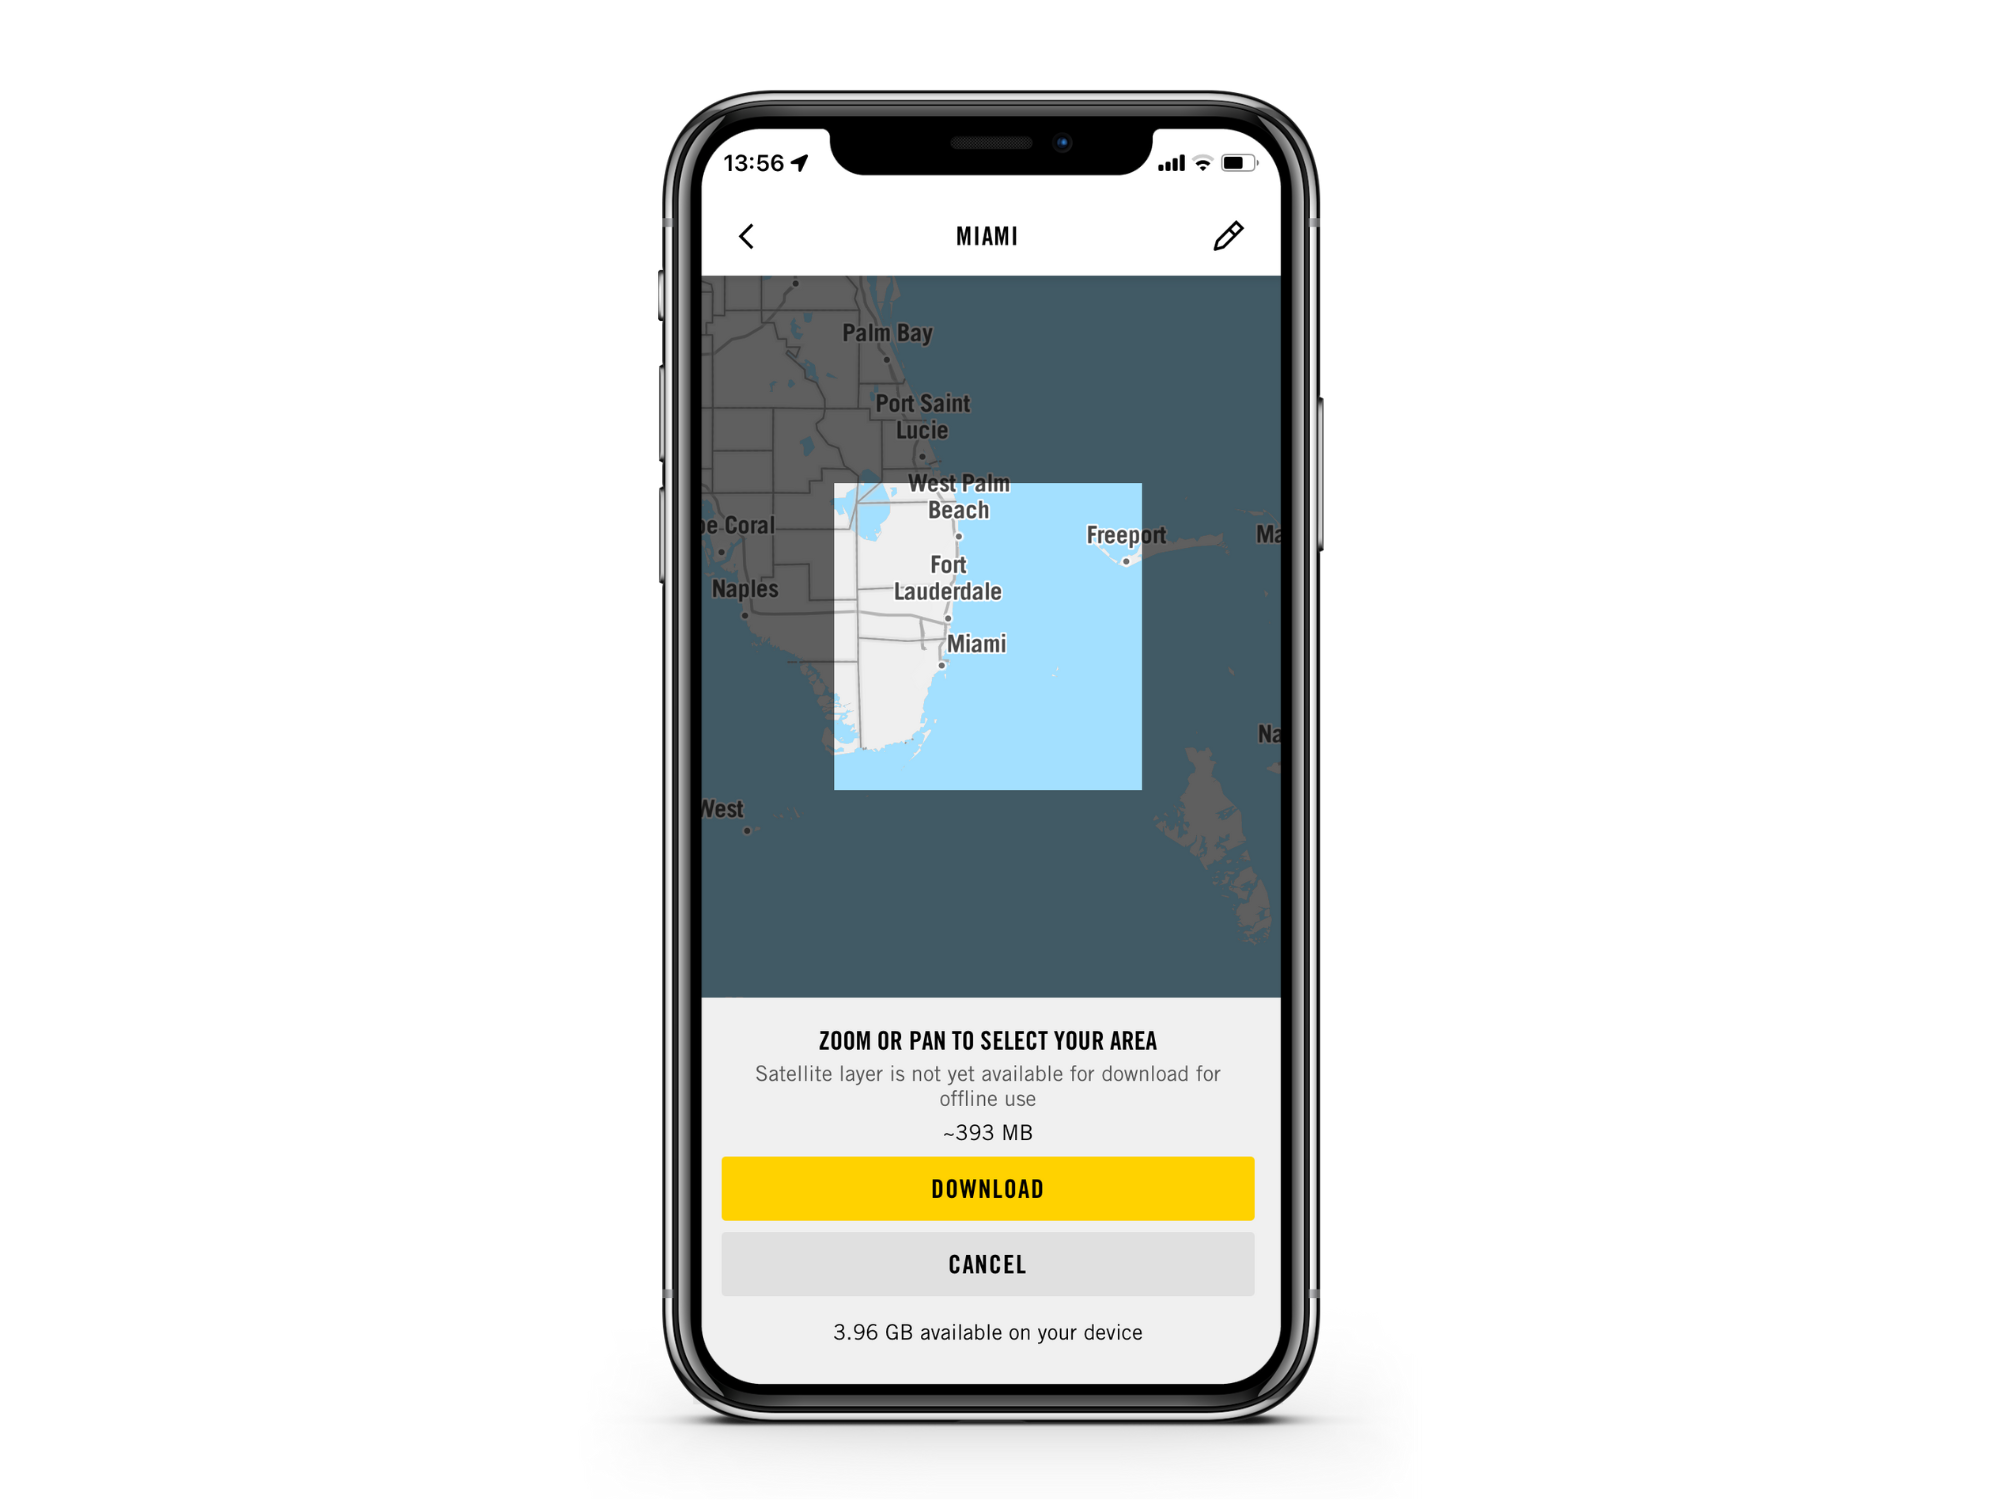  Laddar ner satellitlager från BRP GO!s app på din enhet